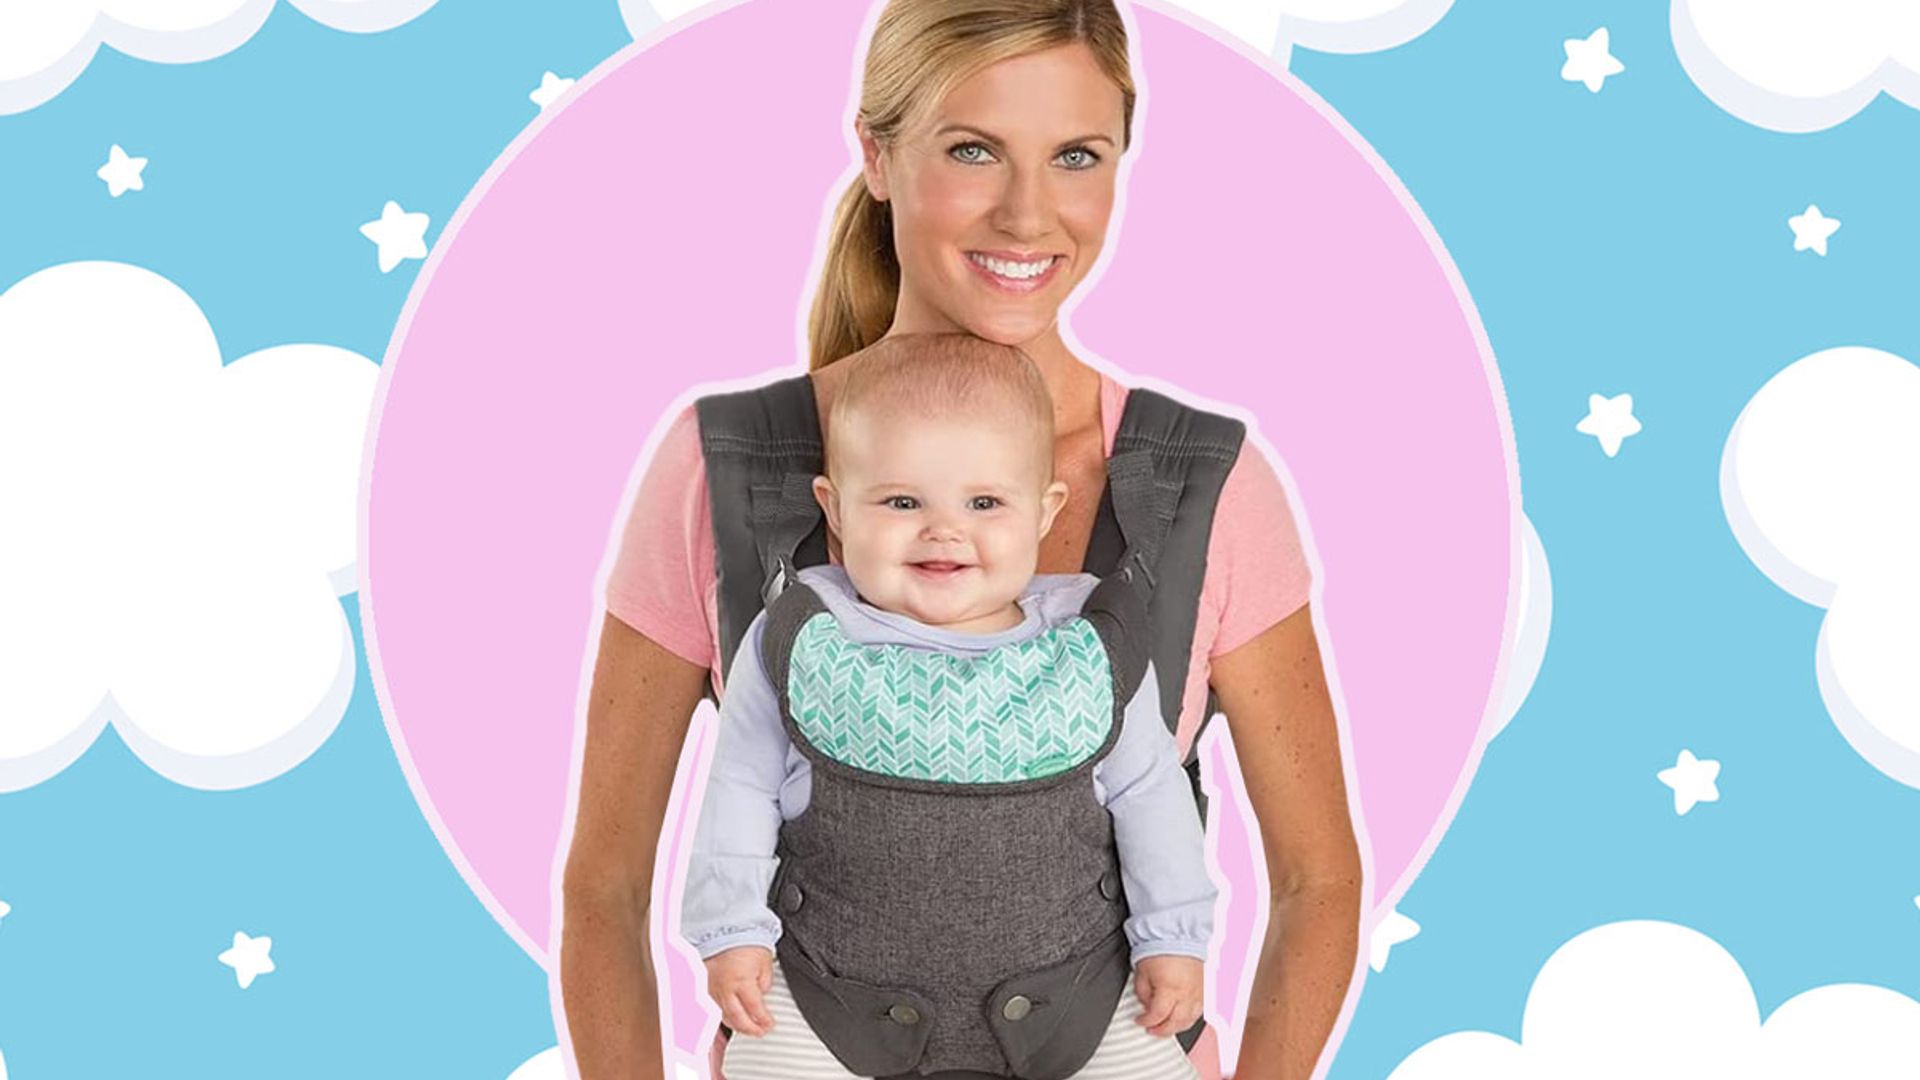 ERGObaby Original Baby Carrier - Baby carriers - Carriers & slings